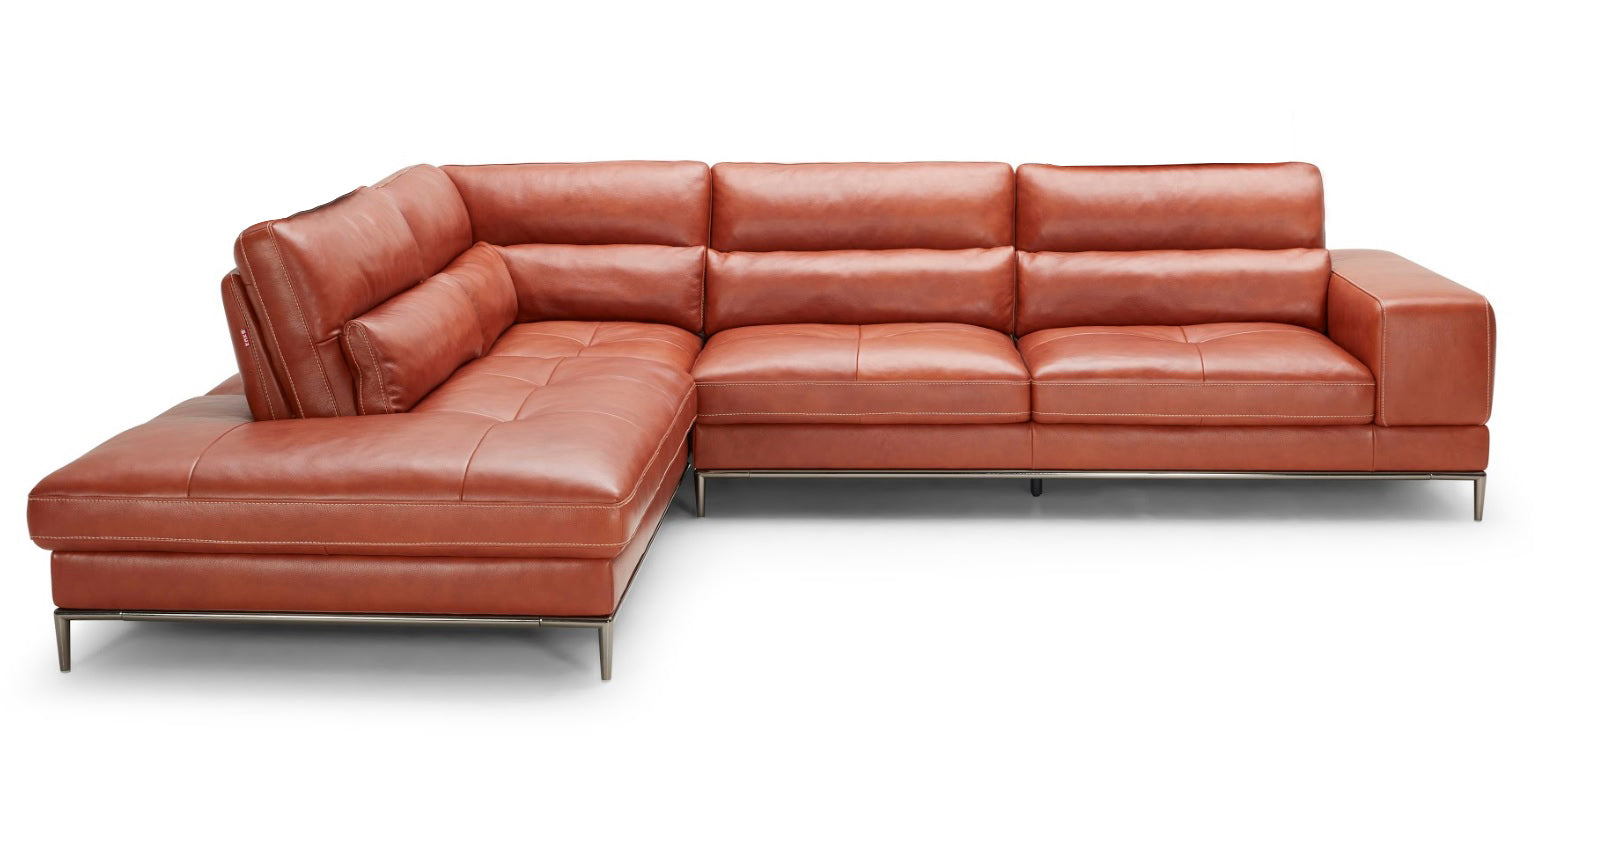 Divani Casa Kudos - Modern Cognac LAF Chaise Sectional Sofa-Sectional Sofa-VIG-Wall2Wall Furnishings